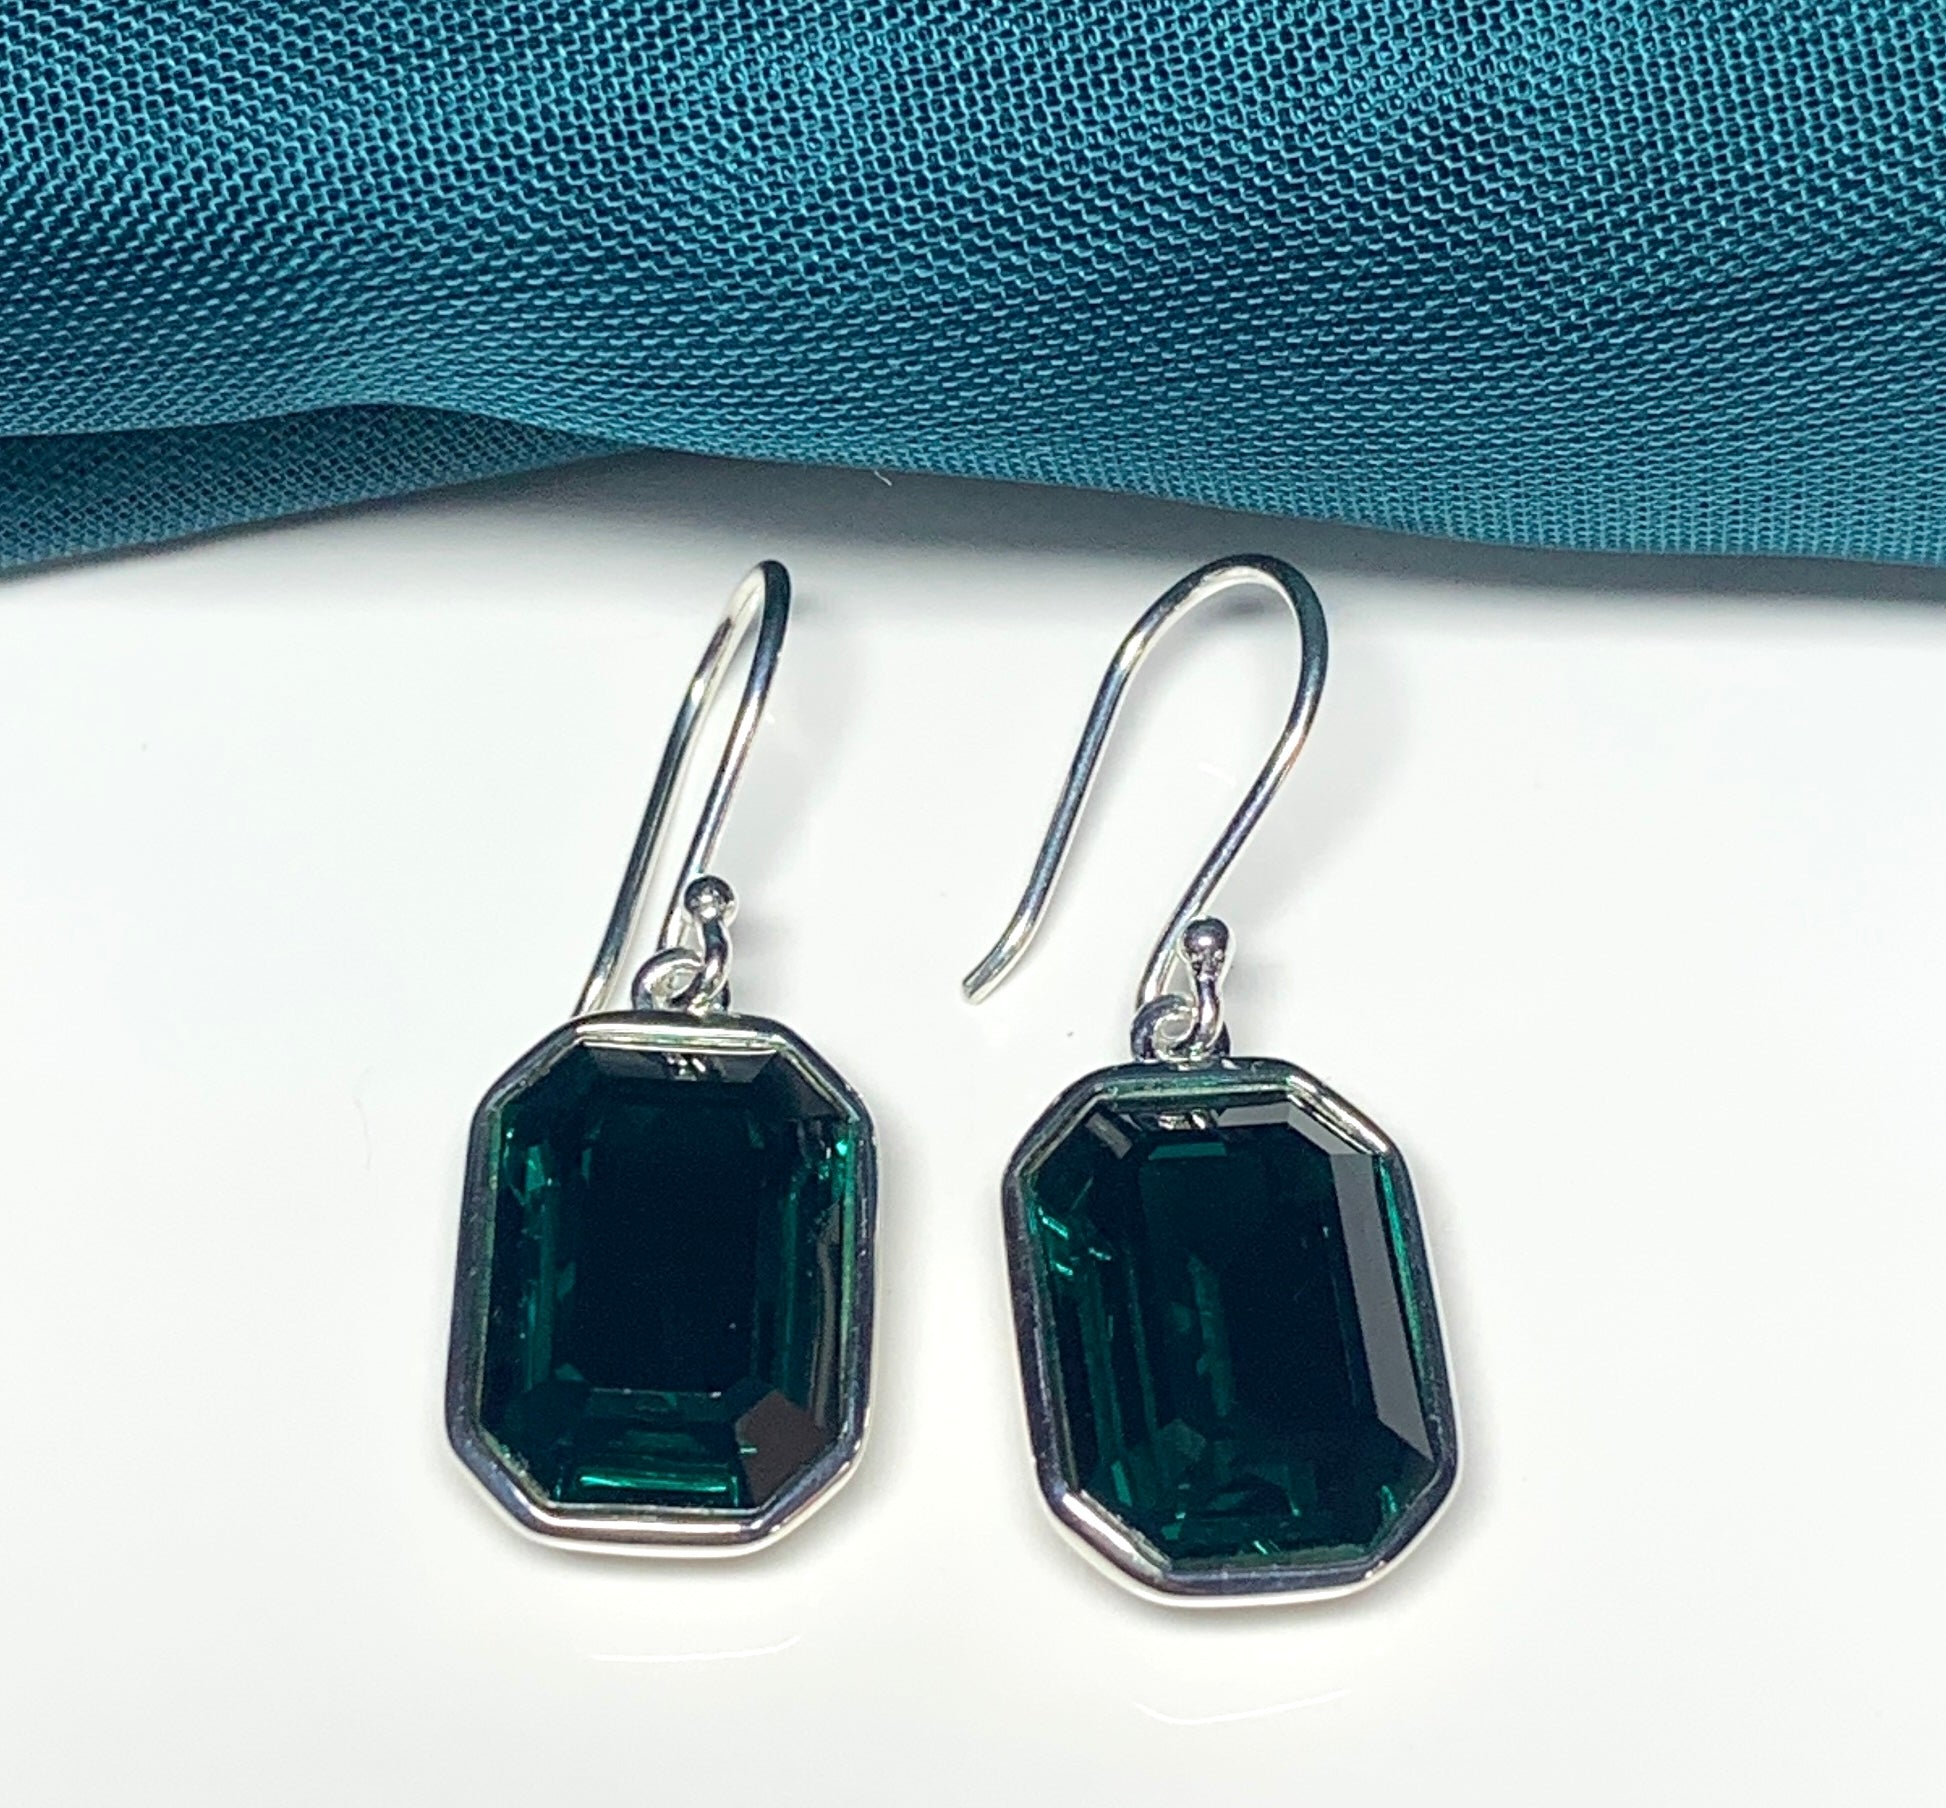 Large emerald green crystal octagonal drop earrings